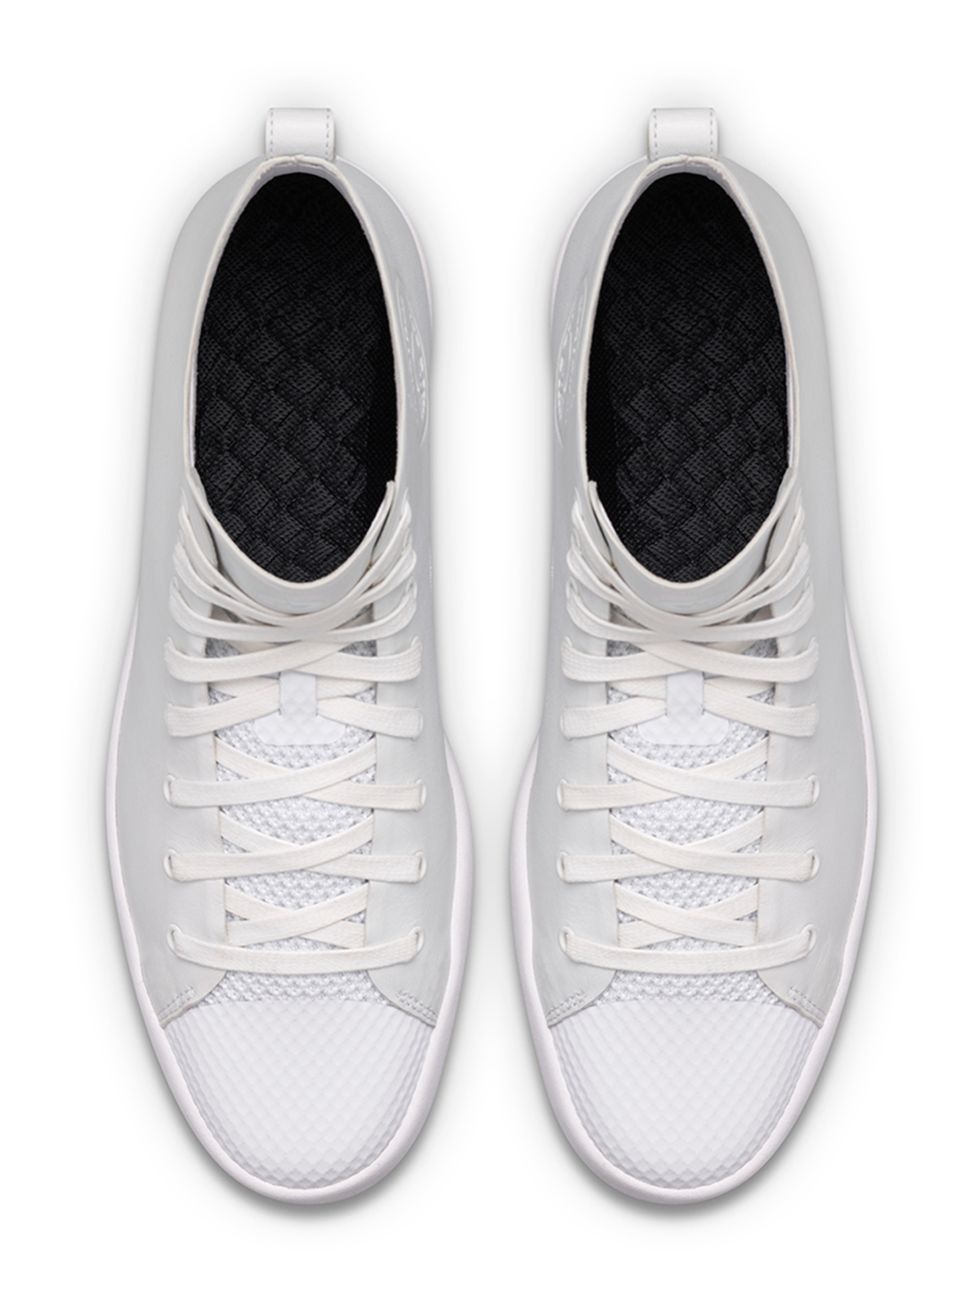 Footwear, Shoe, Product, White, Line, Light, Sneakers, Carmine, Black, Grey, 